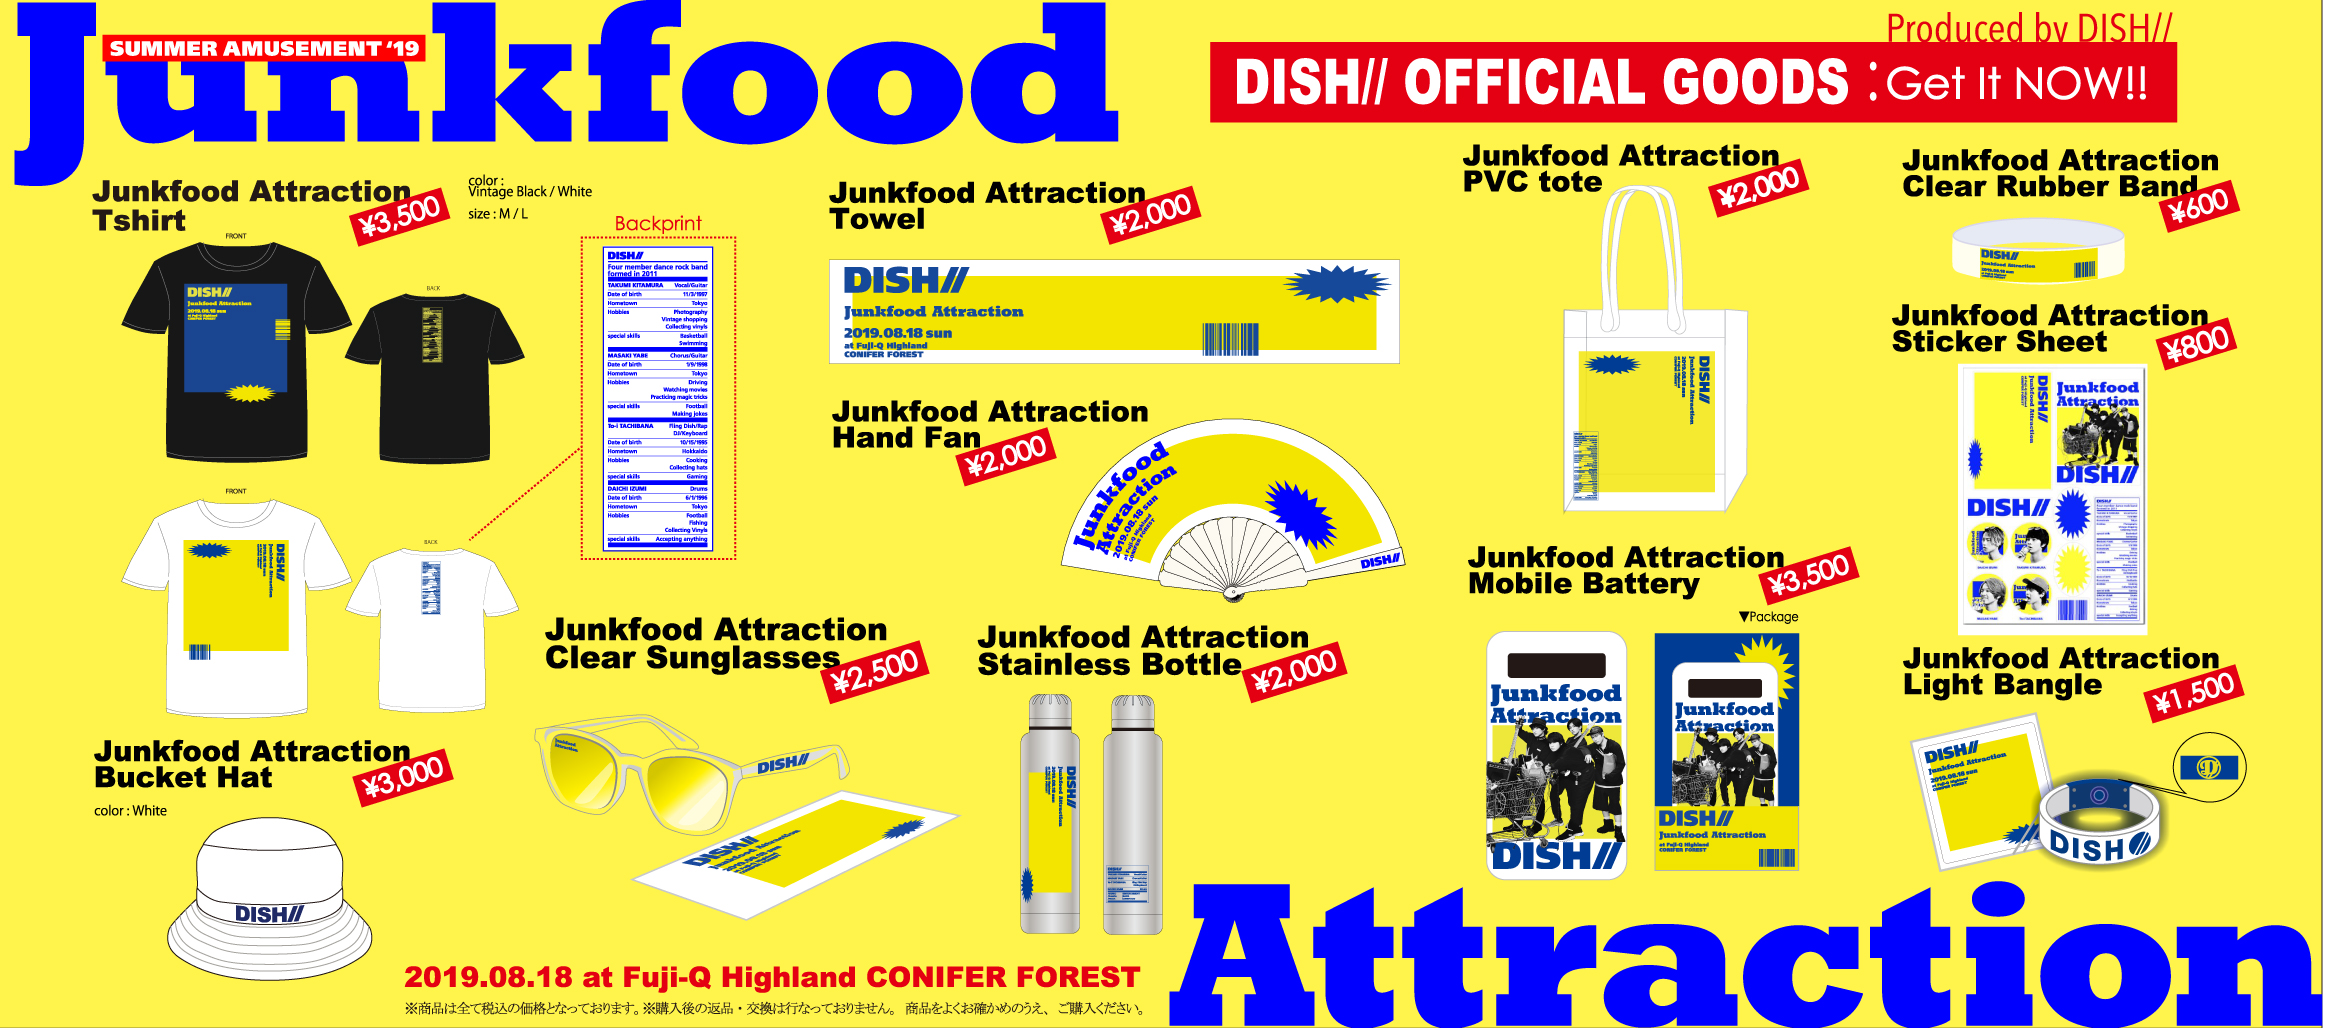 DISH// junk food attraction